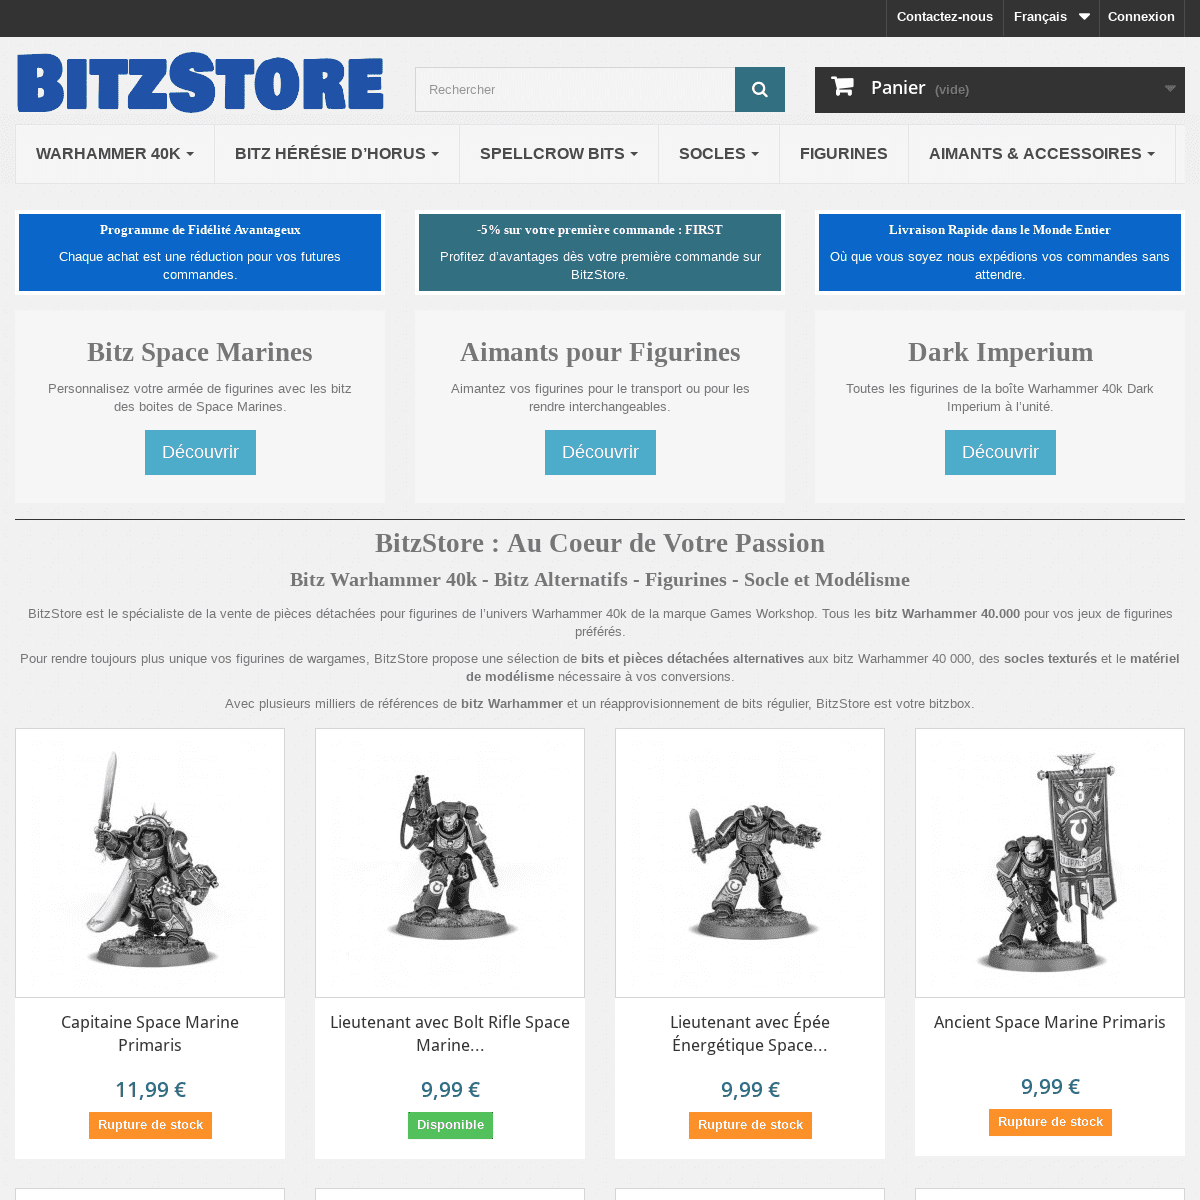 Bitz Warhammer 40k et Bits Alternatifs - W40k Bitz Box - BitzStore